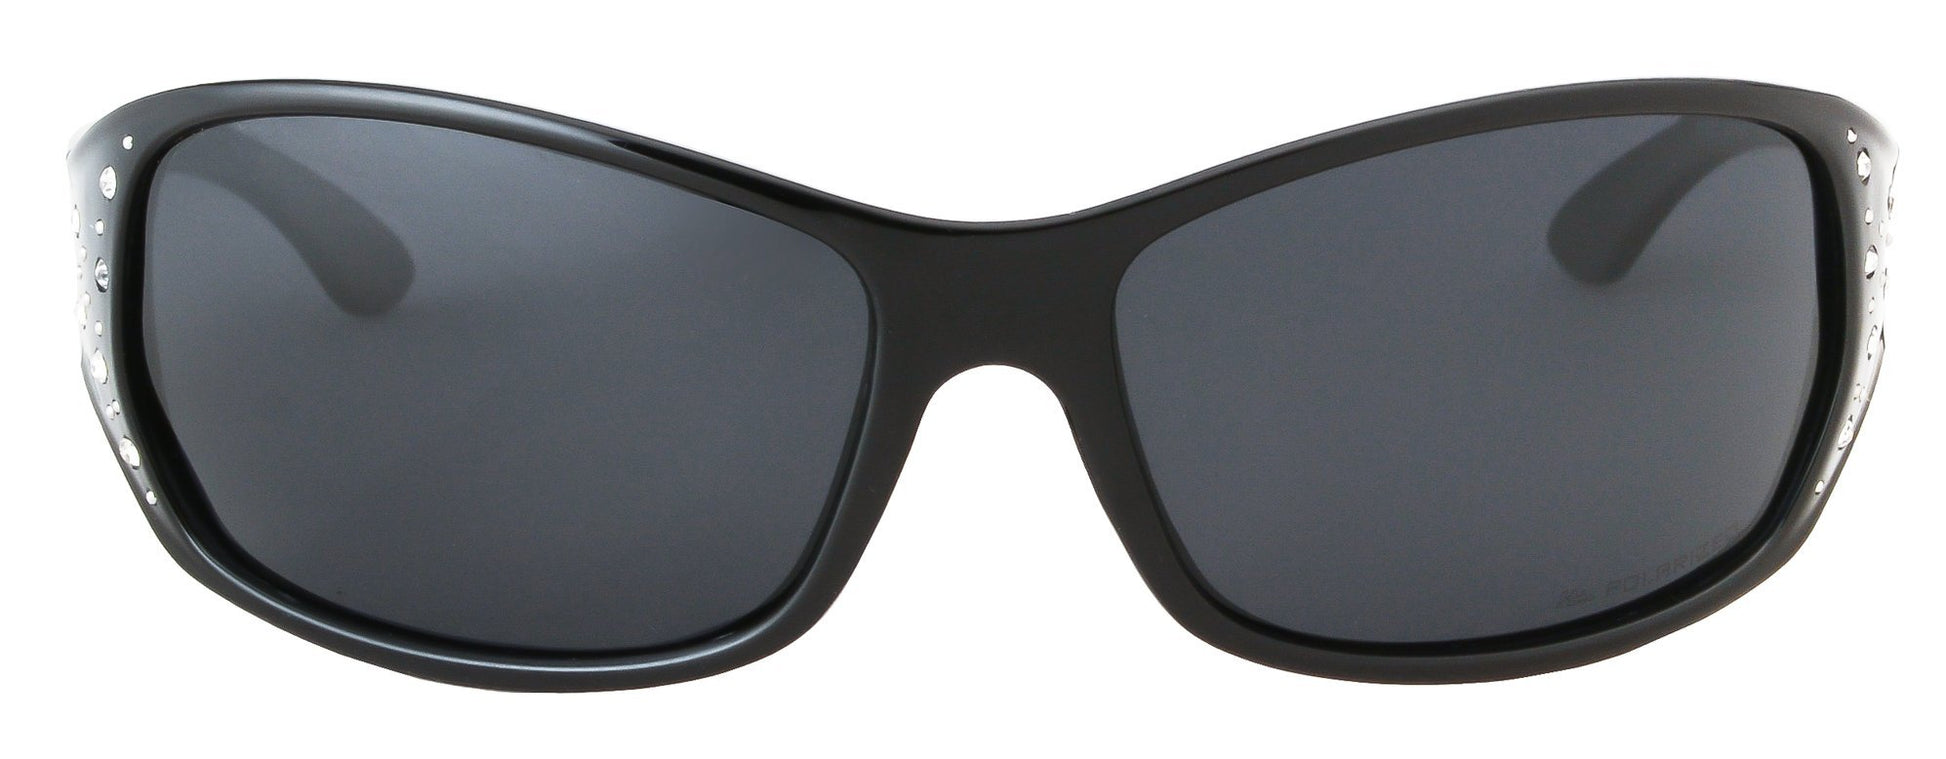 Second image: Polarized Sunglasses for Women – Midnight Black Frame – Dark Smoke Lens – HZ Series Elettra – Women’s Premium Designer Fashion Sunglasses